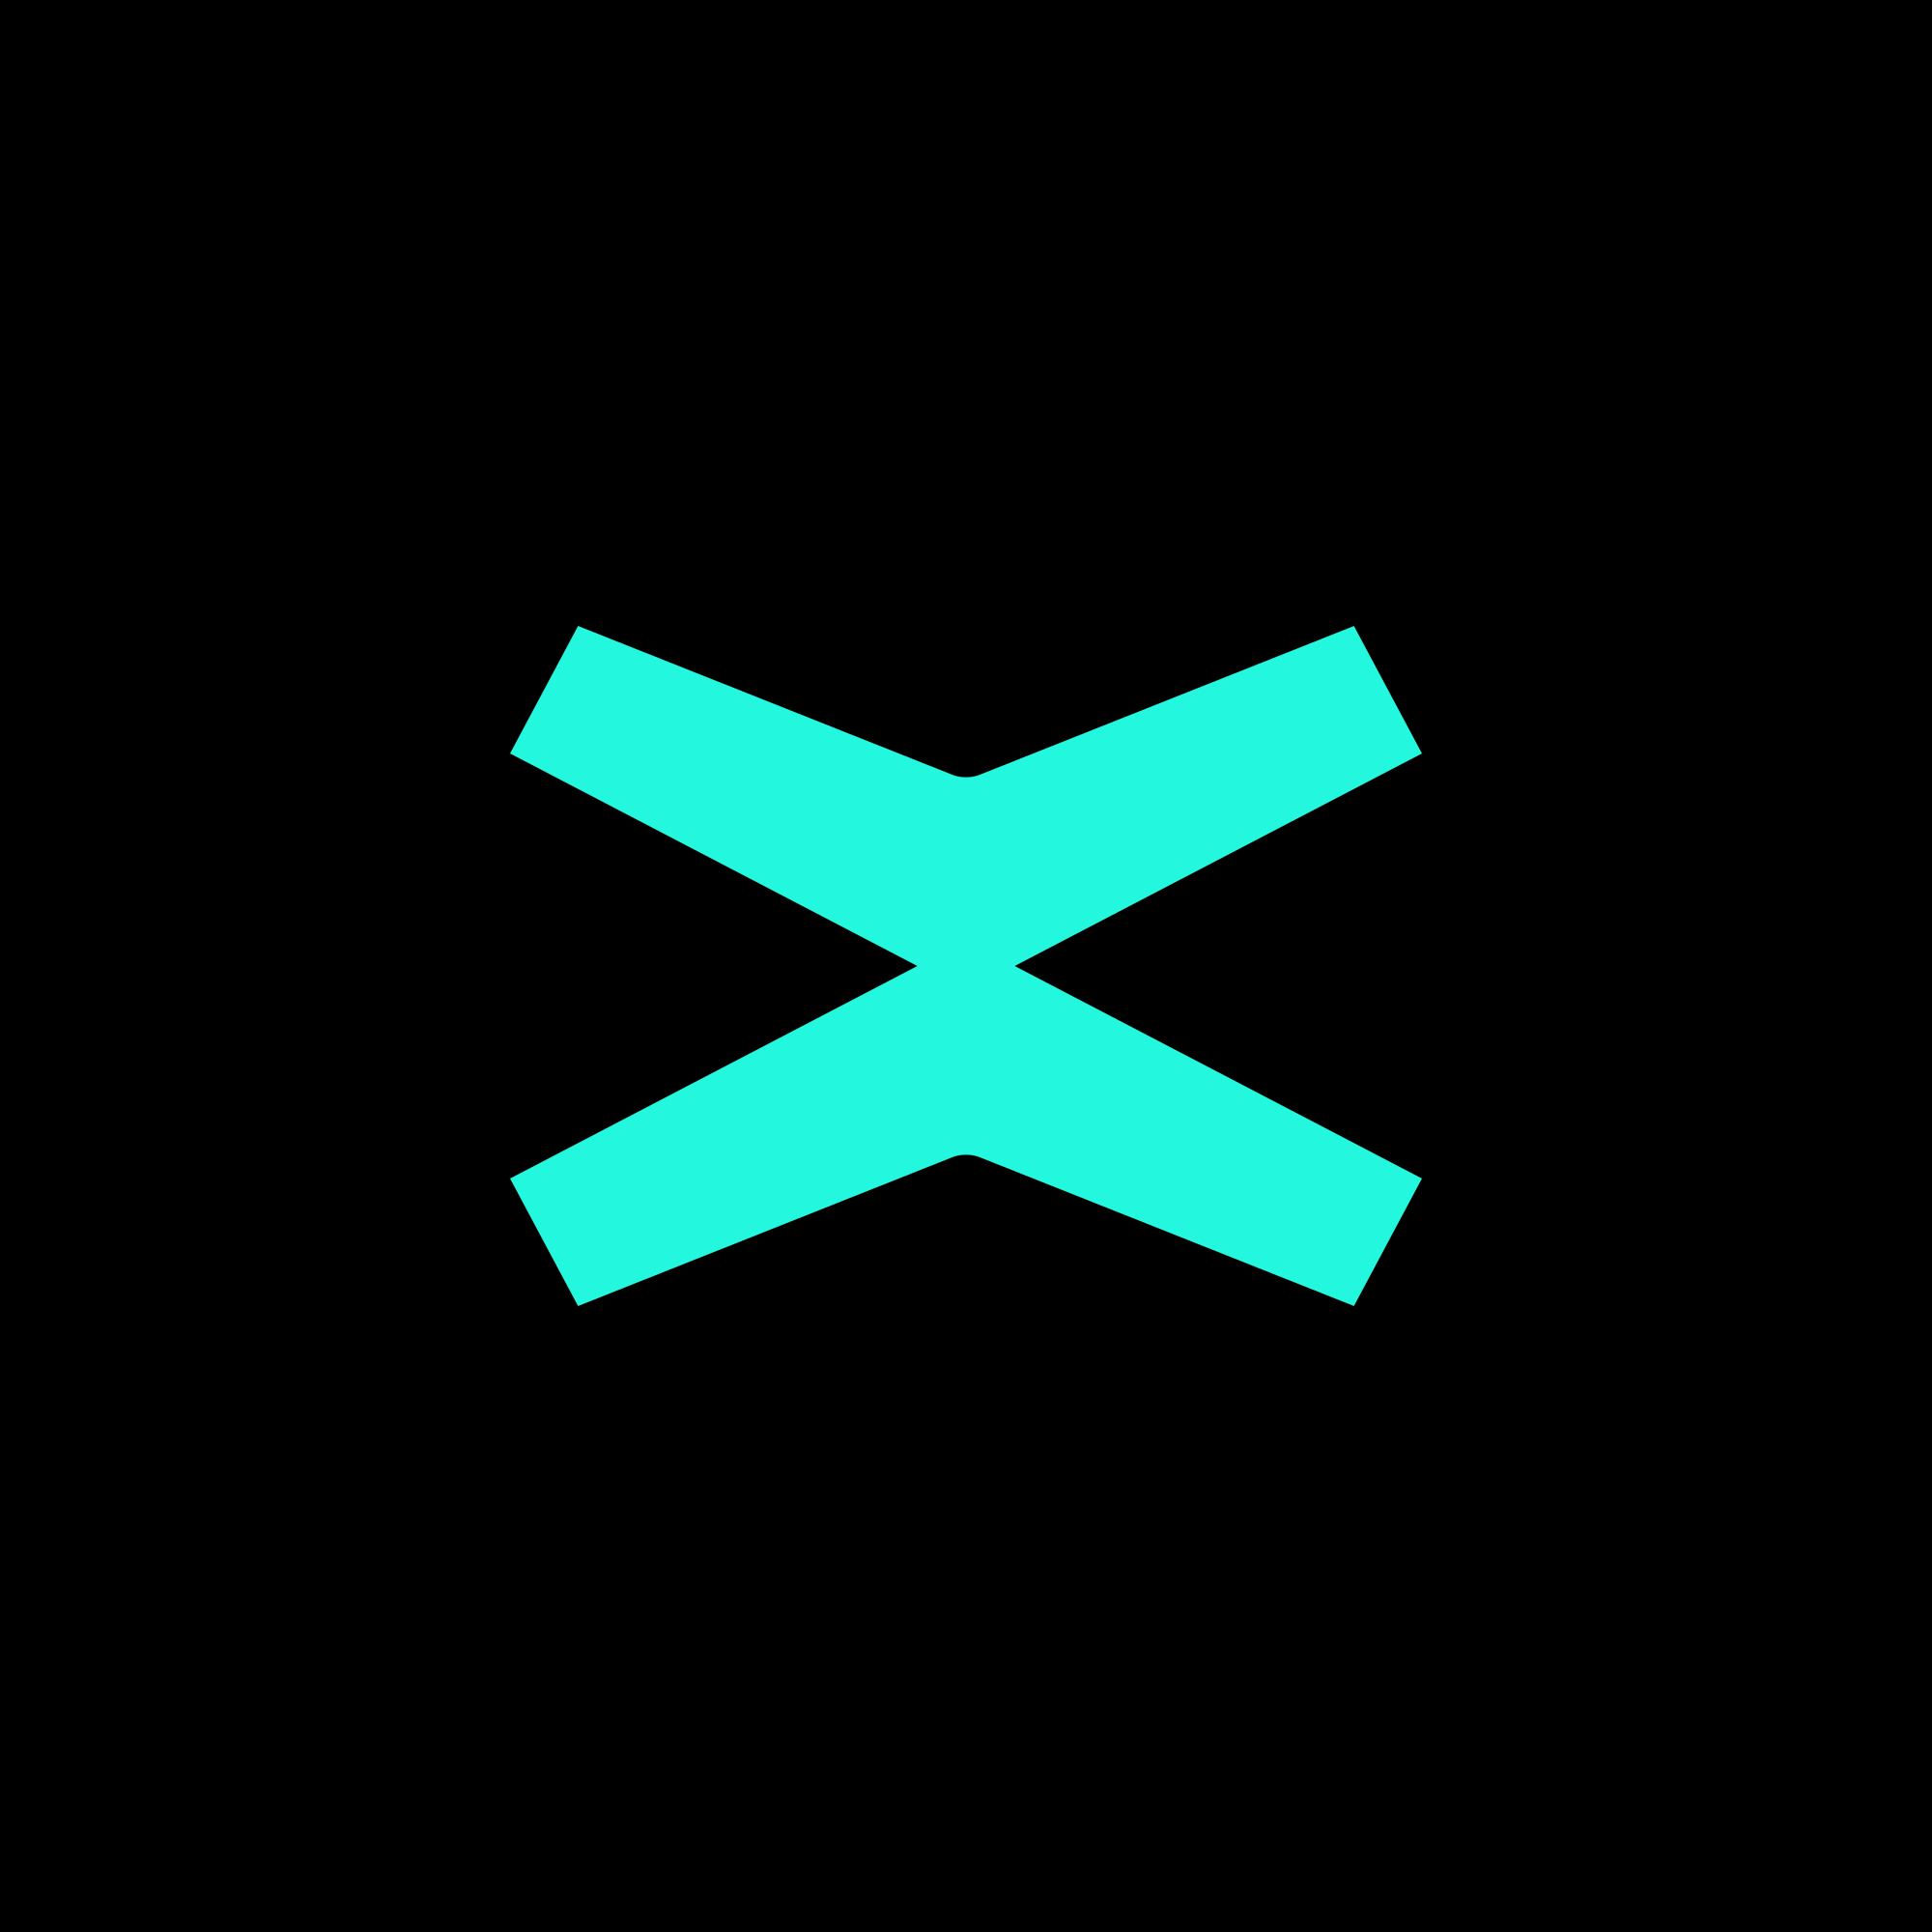 MultiversX logo